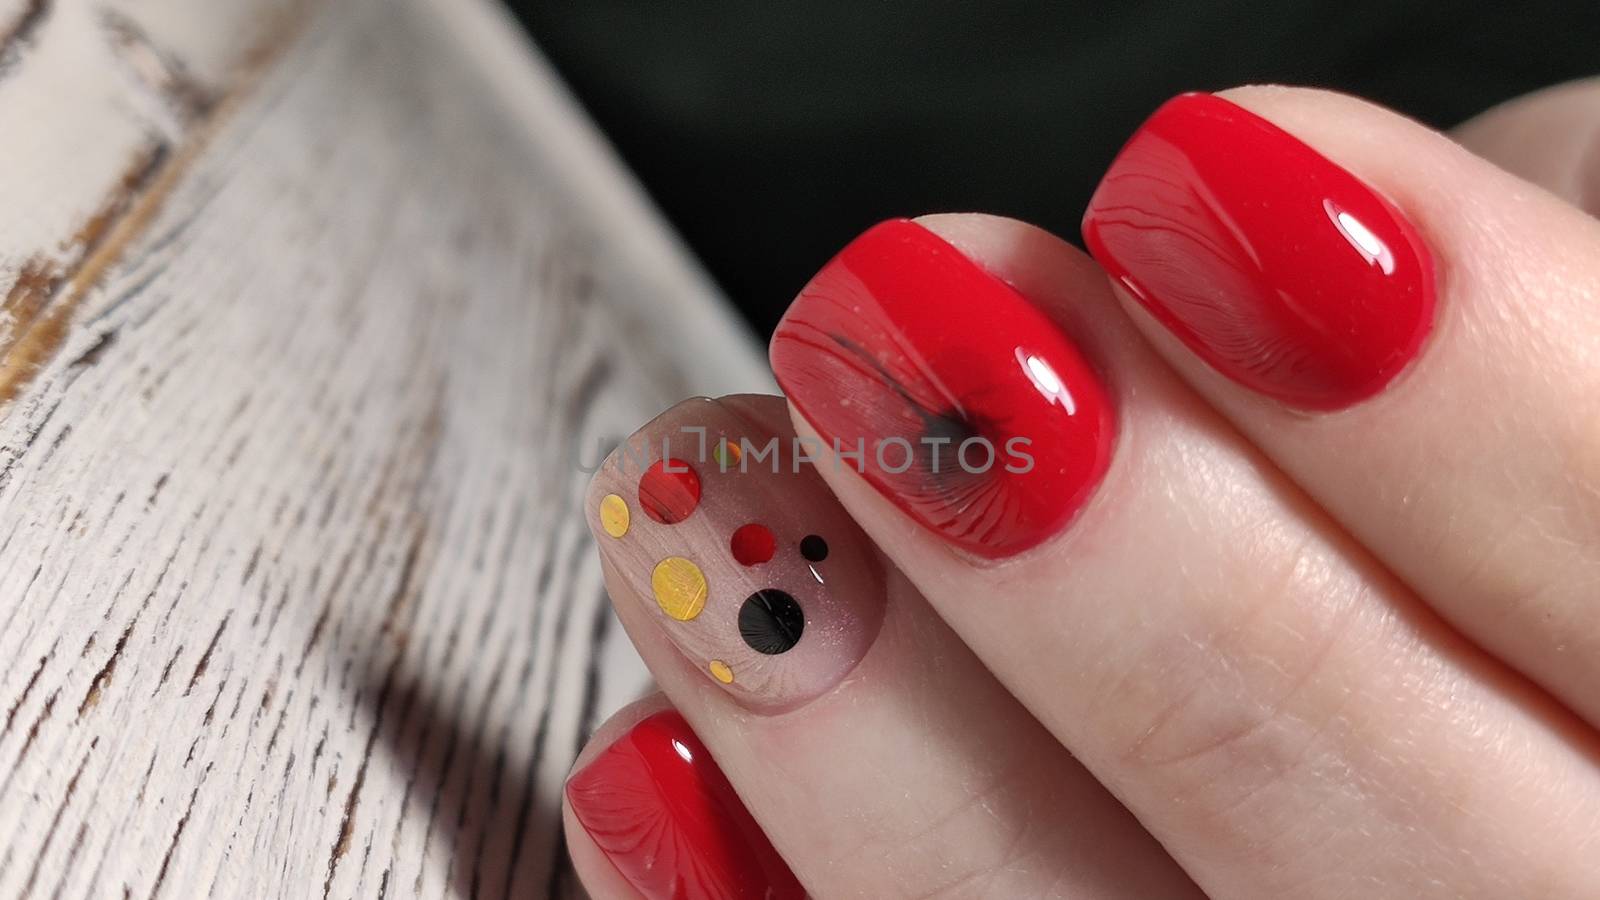 Glamorous luxurious crocodile manicure. Design glamorous nails by SmirMaxStock